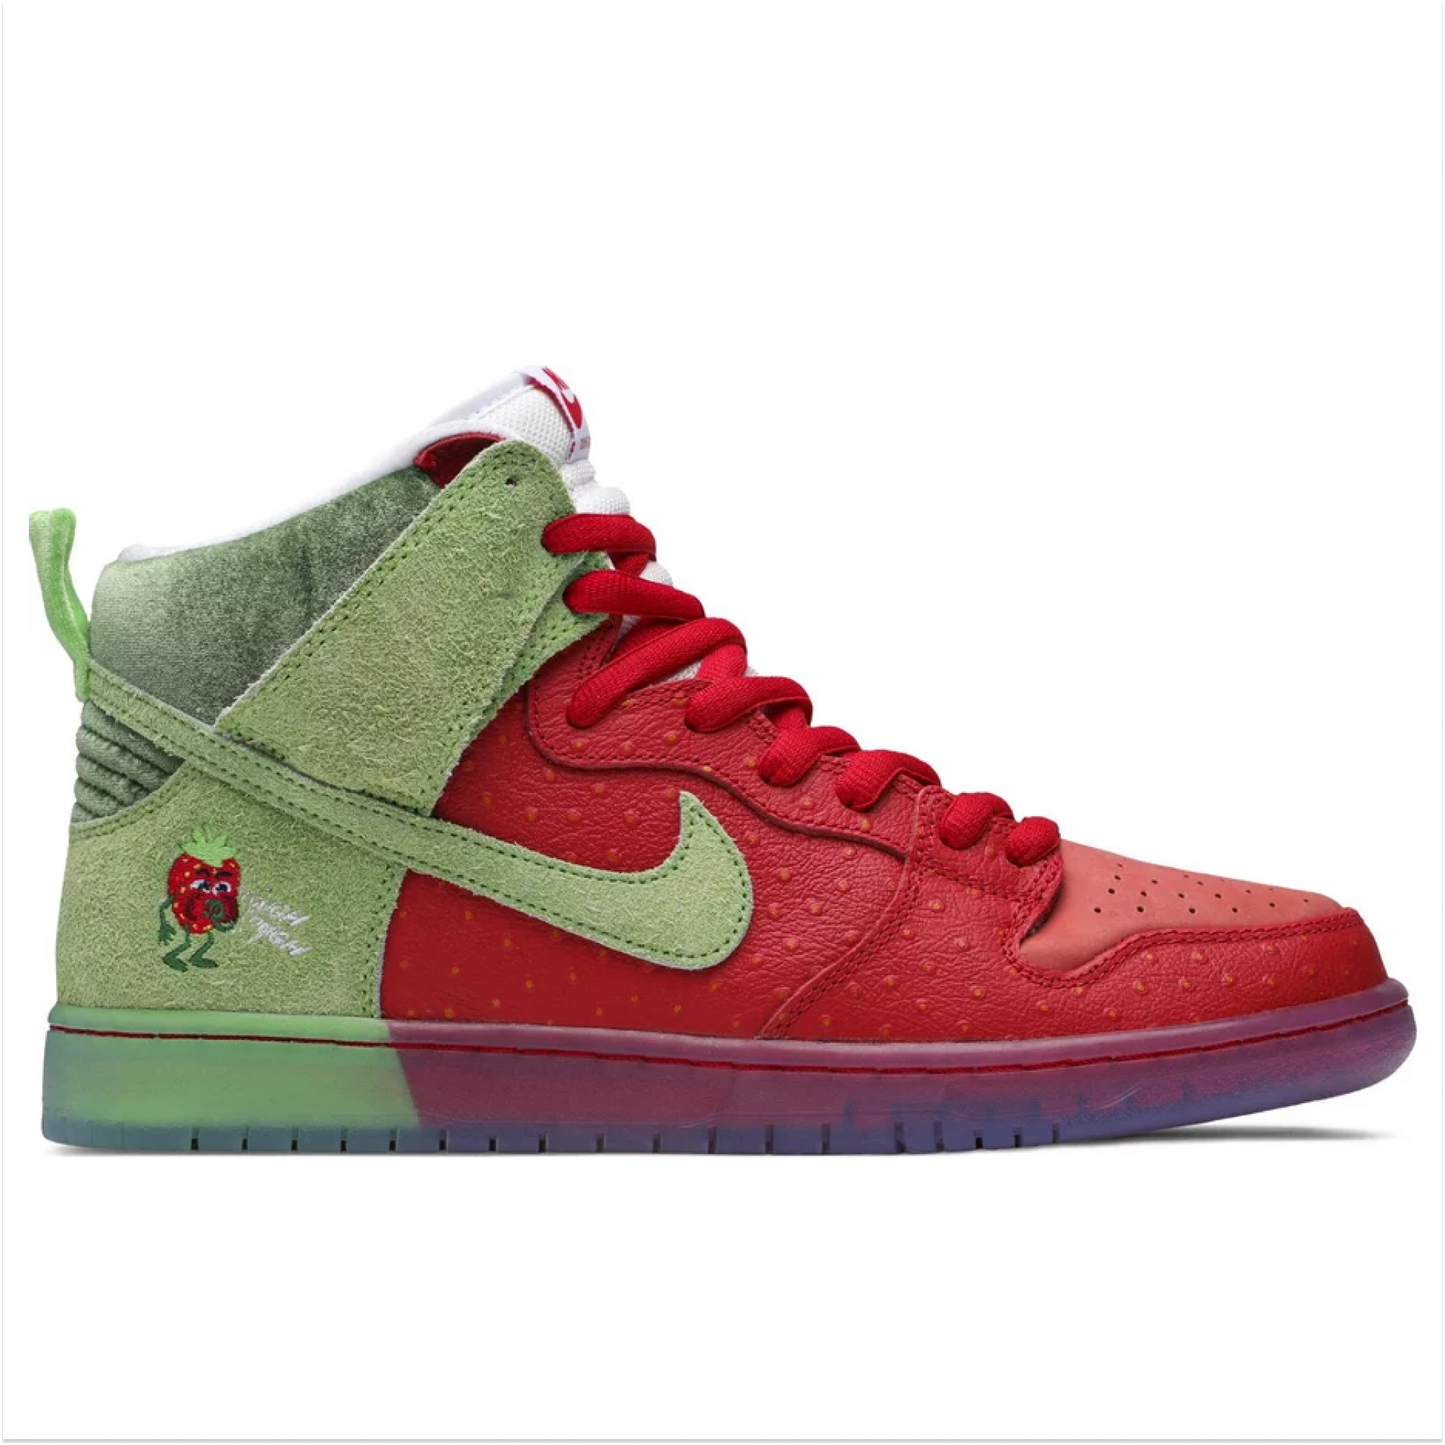 Nike SB Dunk High Strawberry Cough Air Jordan